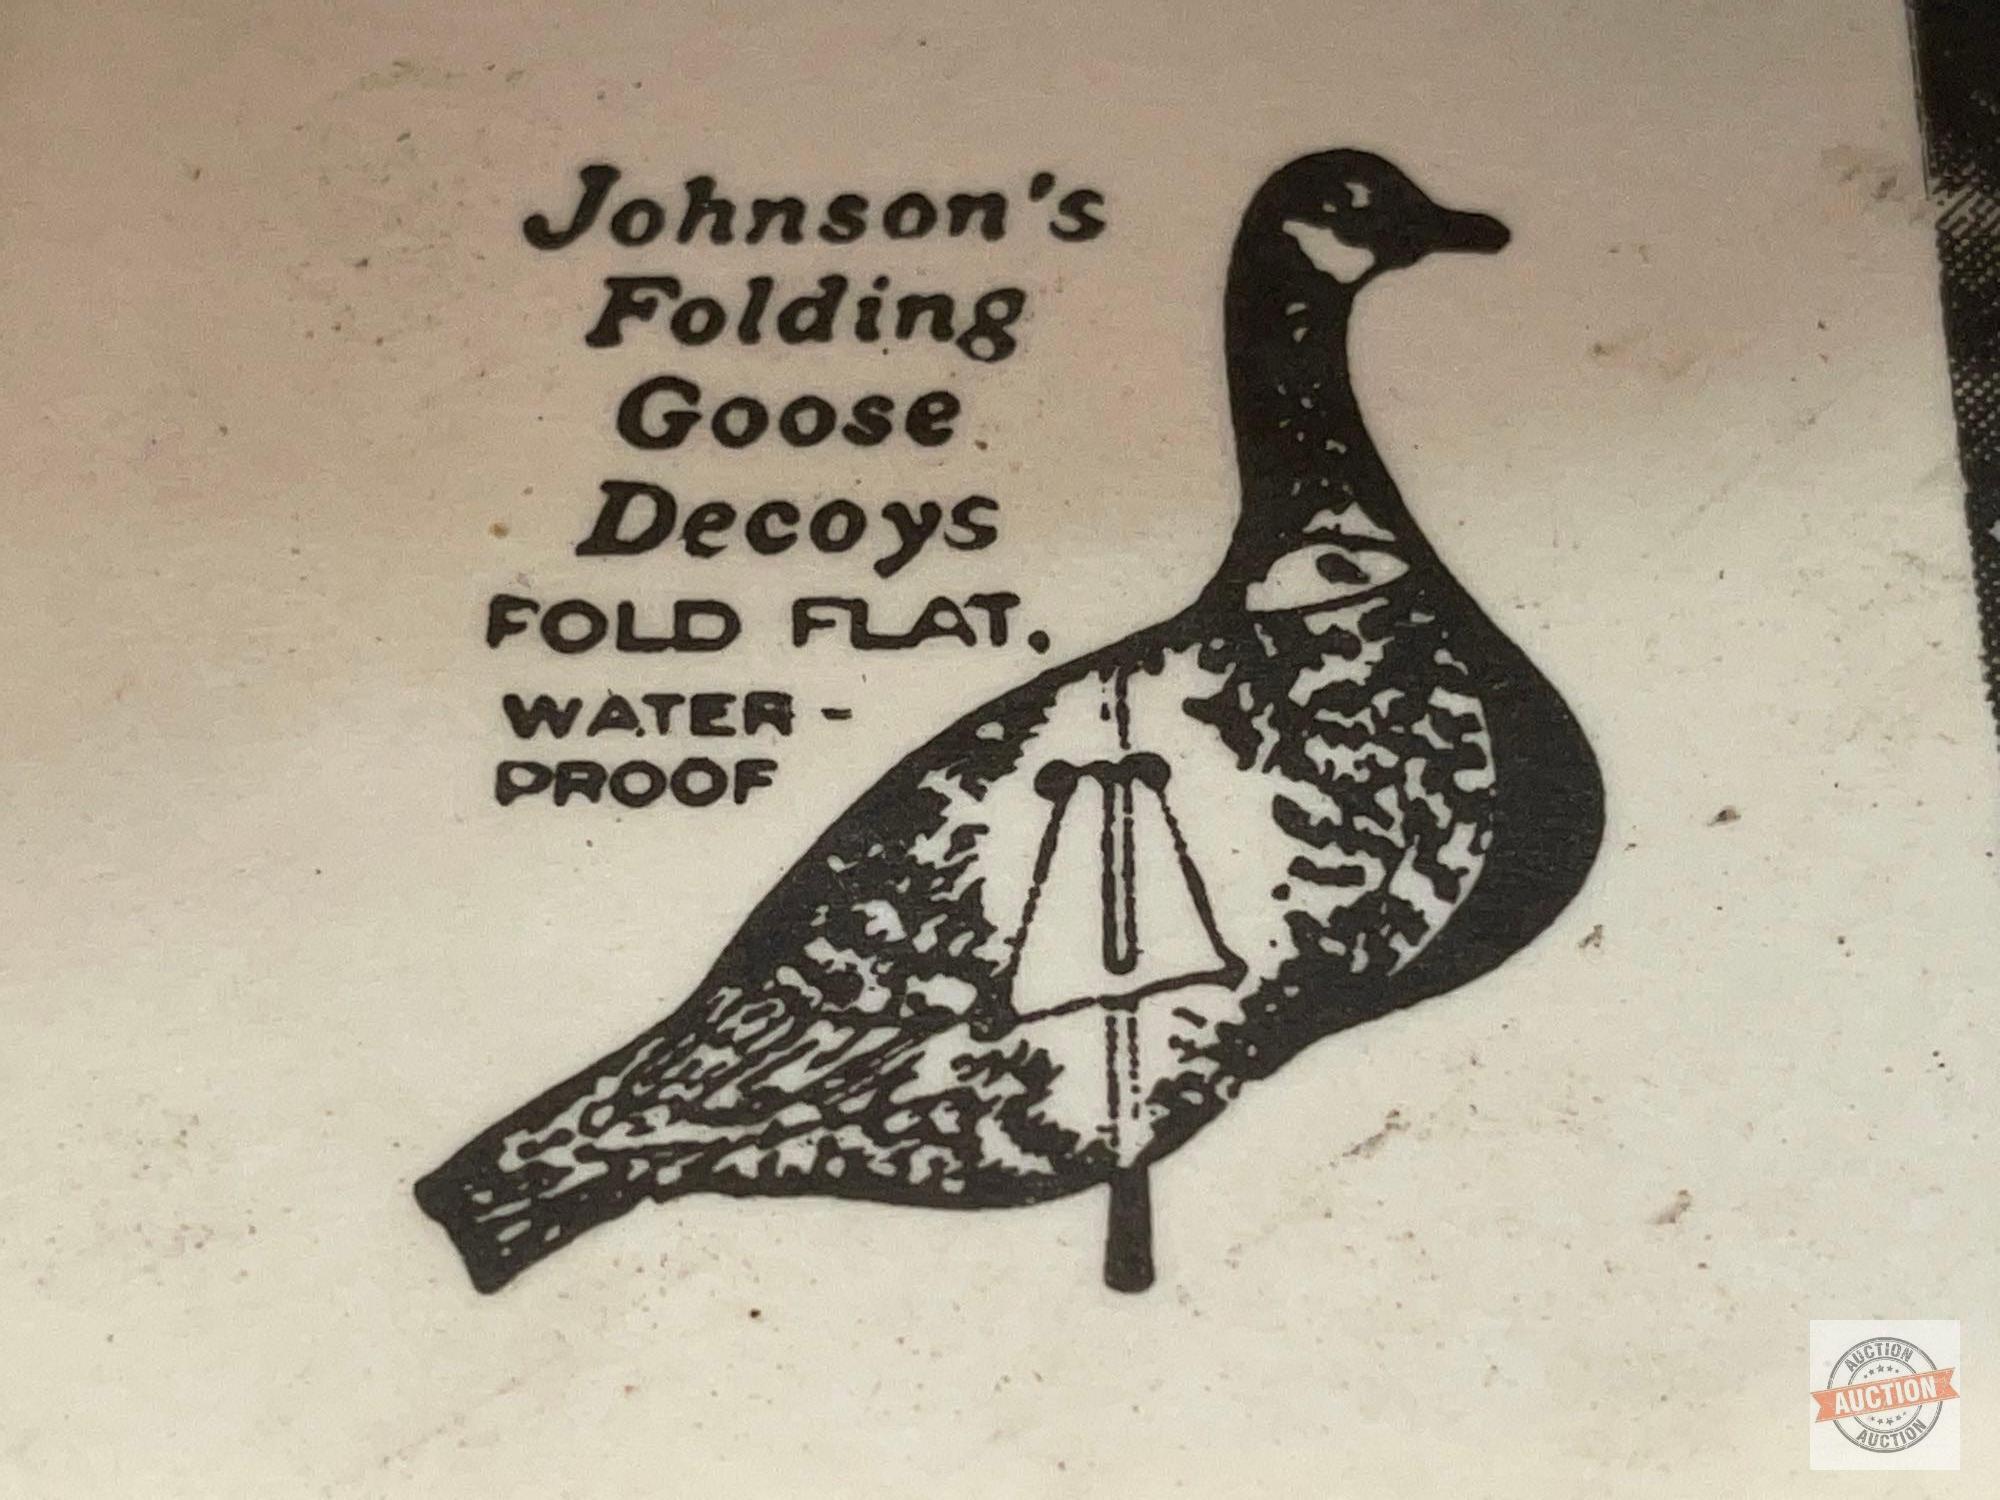 Goose Decoy's - Johnson's Large Folding goose decoys, 9 reg, 4 feeding, 22"wx9.5"h body